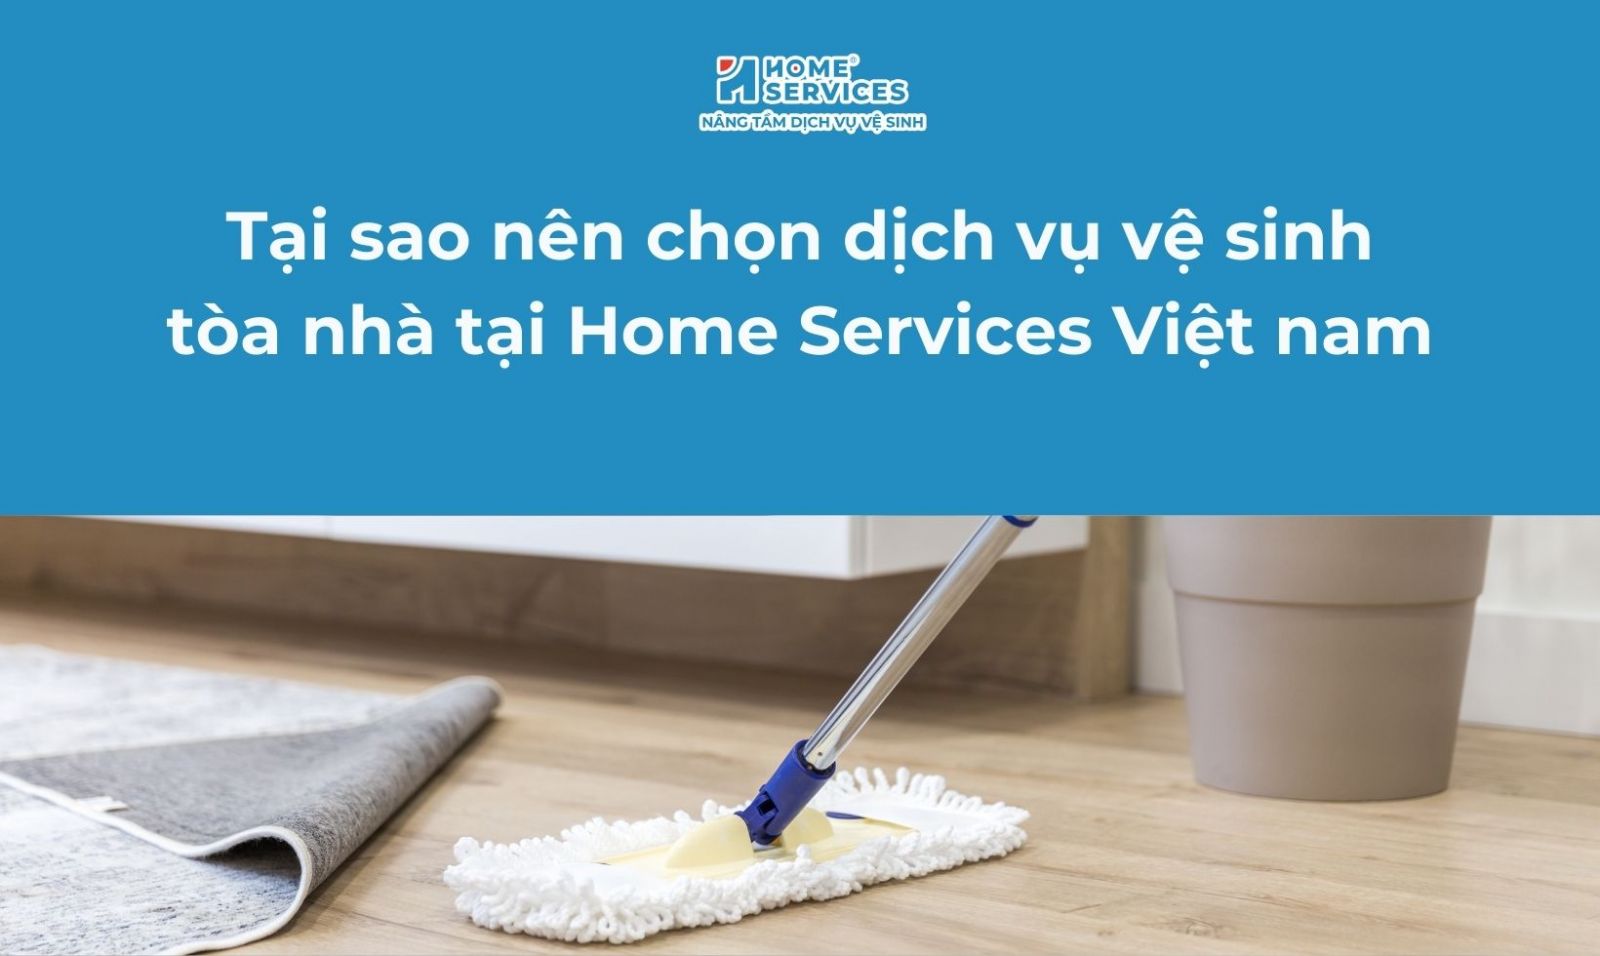 dịch vụ vệ sinh home services việt nam